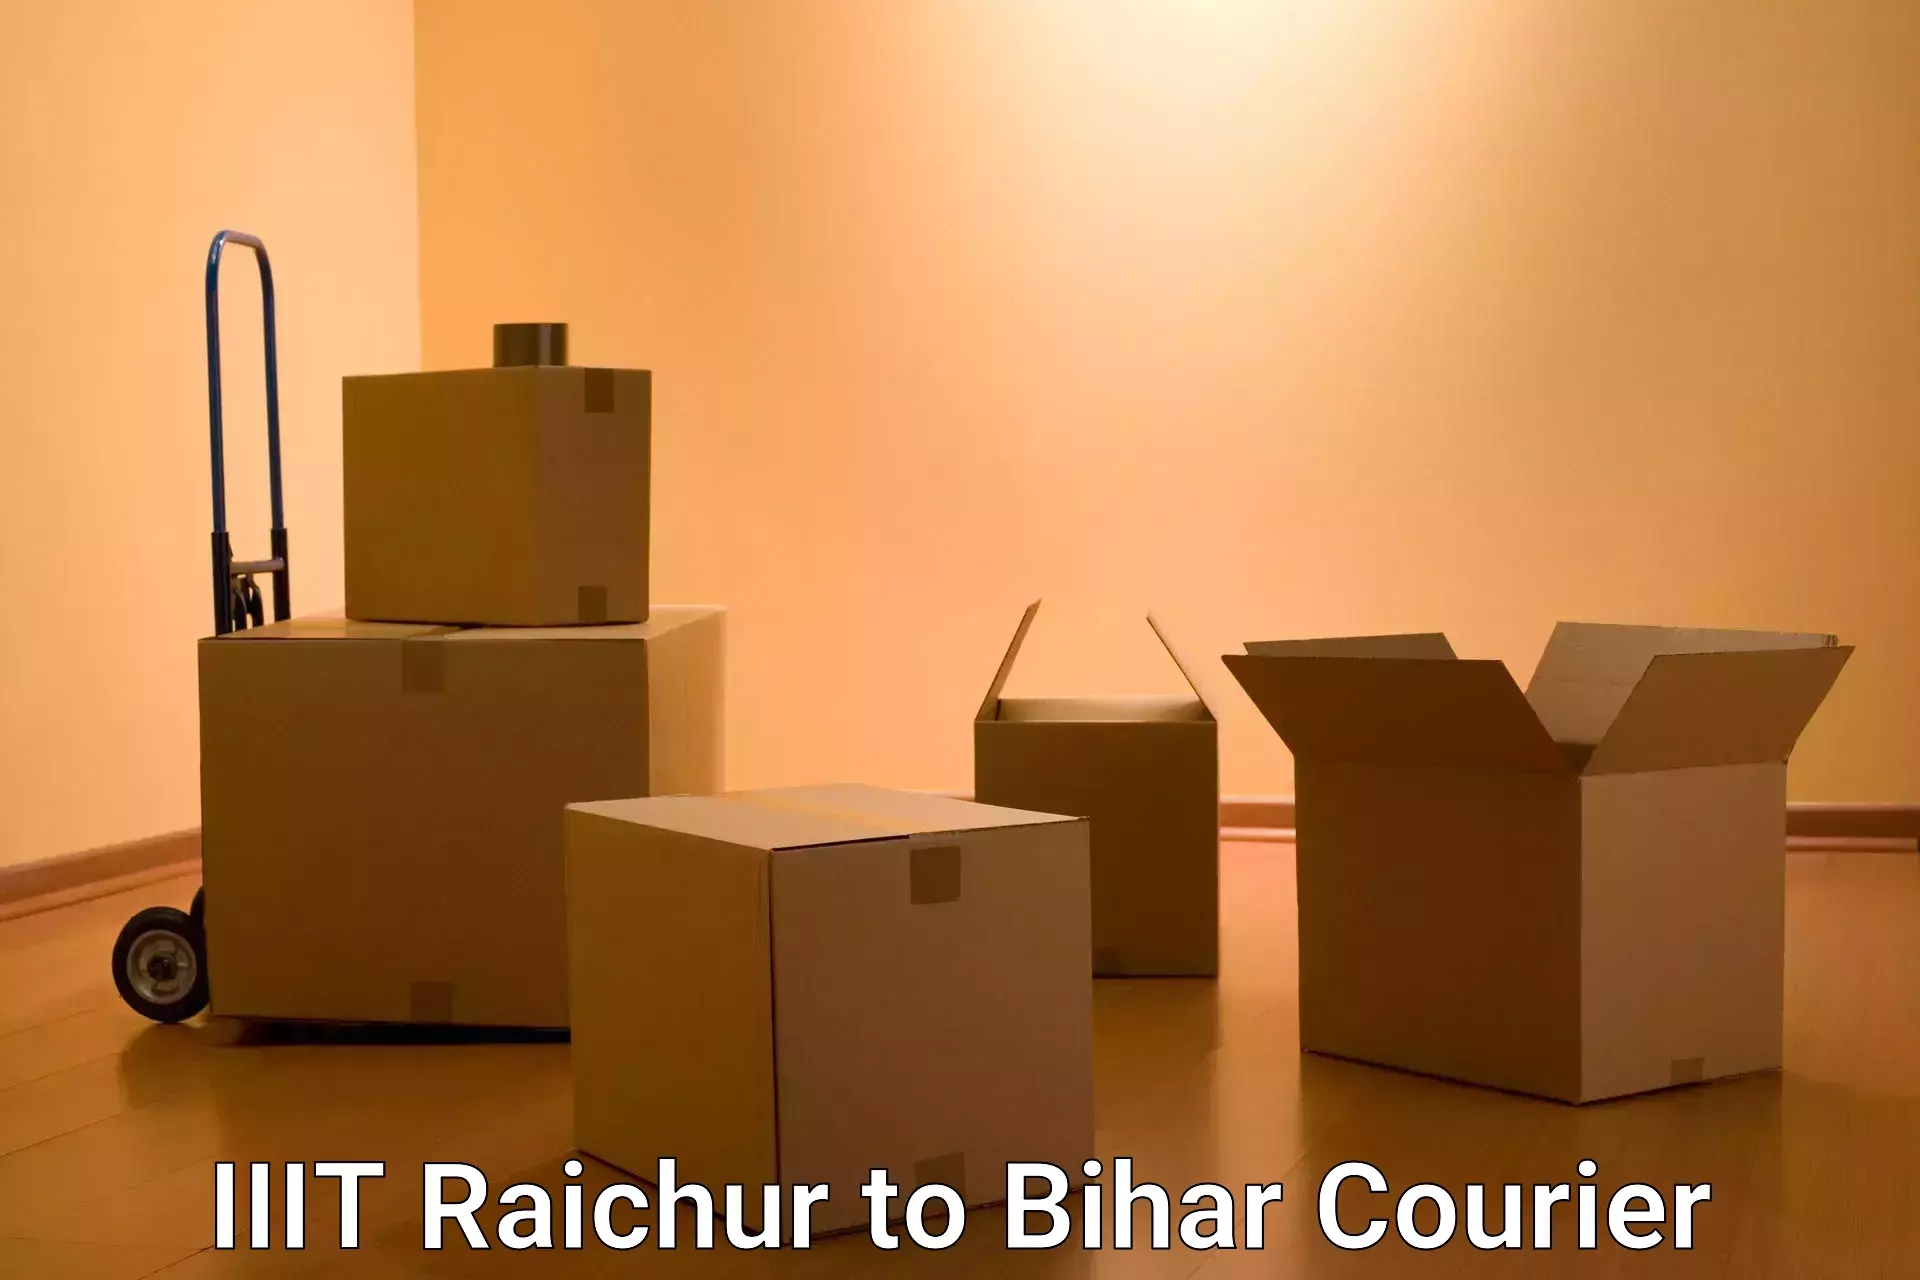 Cash on delivery service IIIT Raichur to Bihar